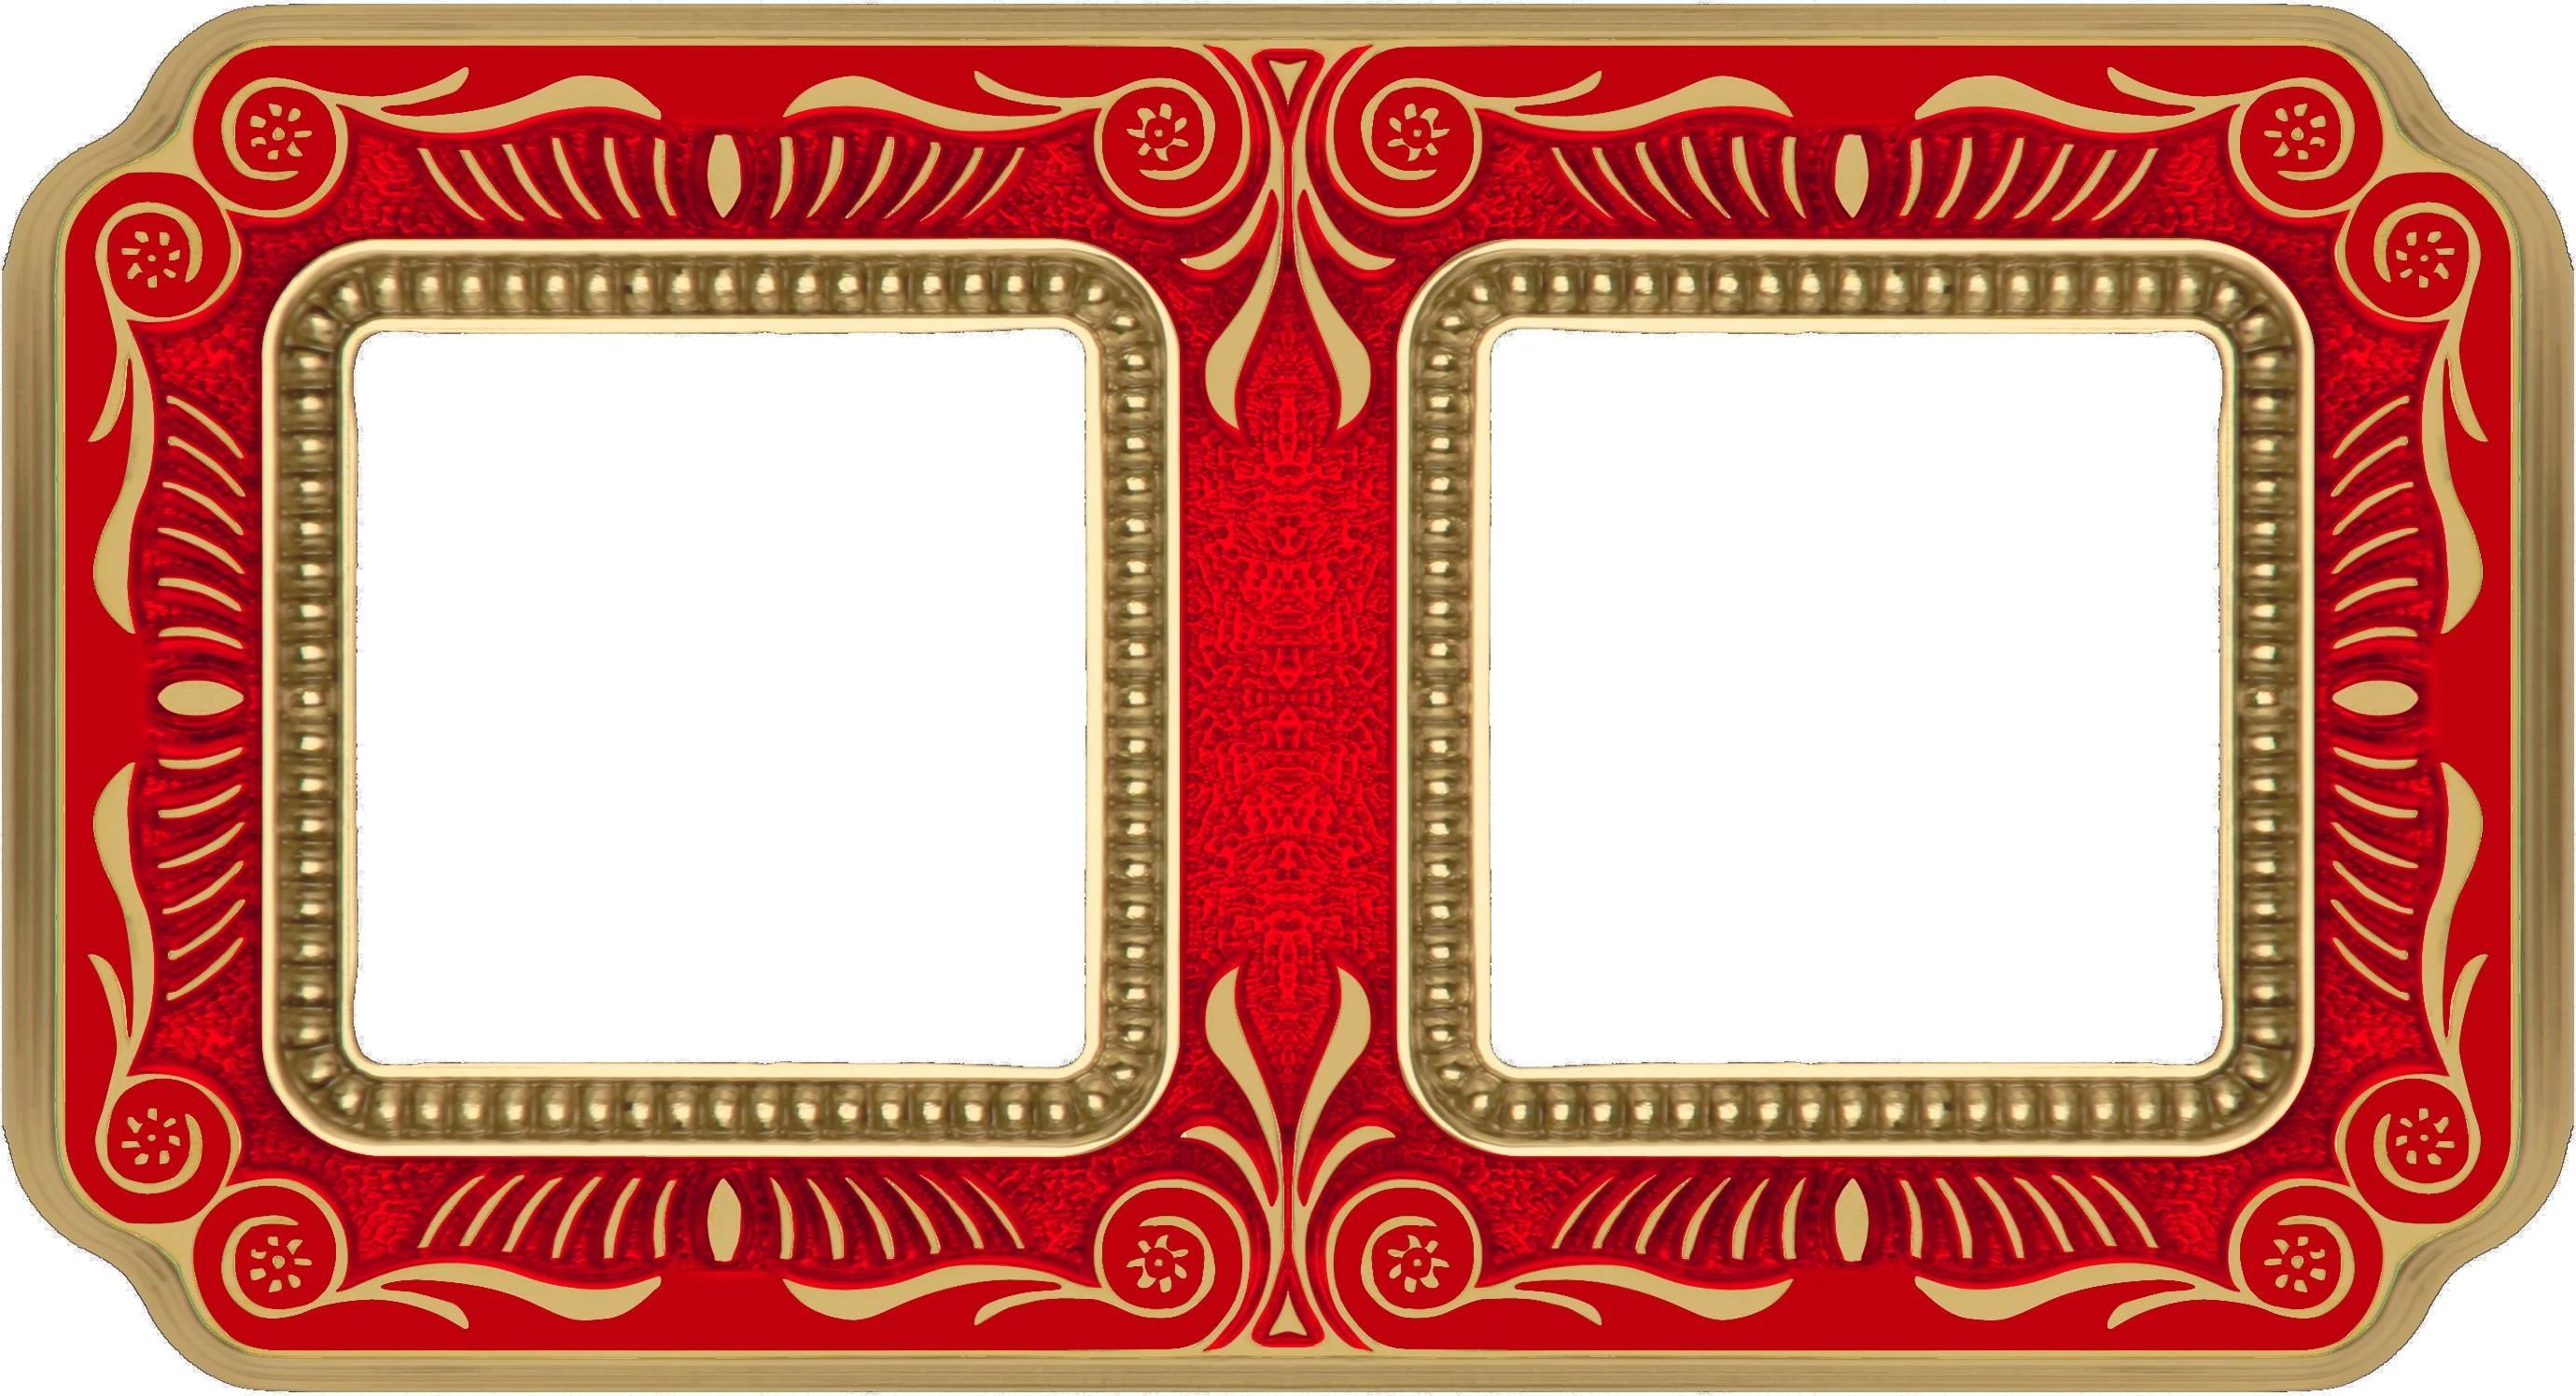  артикул FD01362ROEN название Рамка 2-ая (двойная), цвет Рубиново-красный, Firenze, Fede